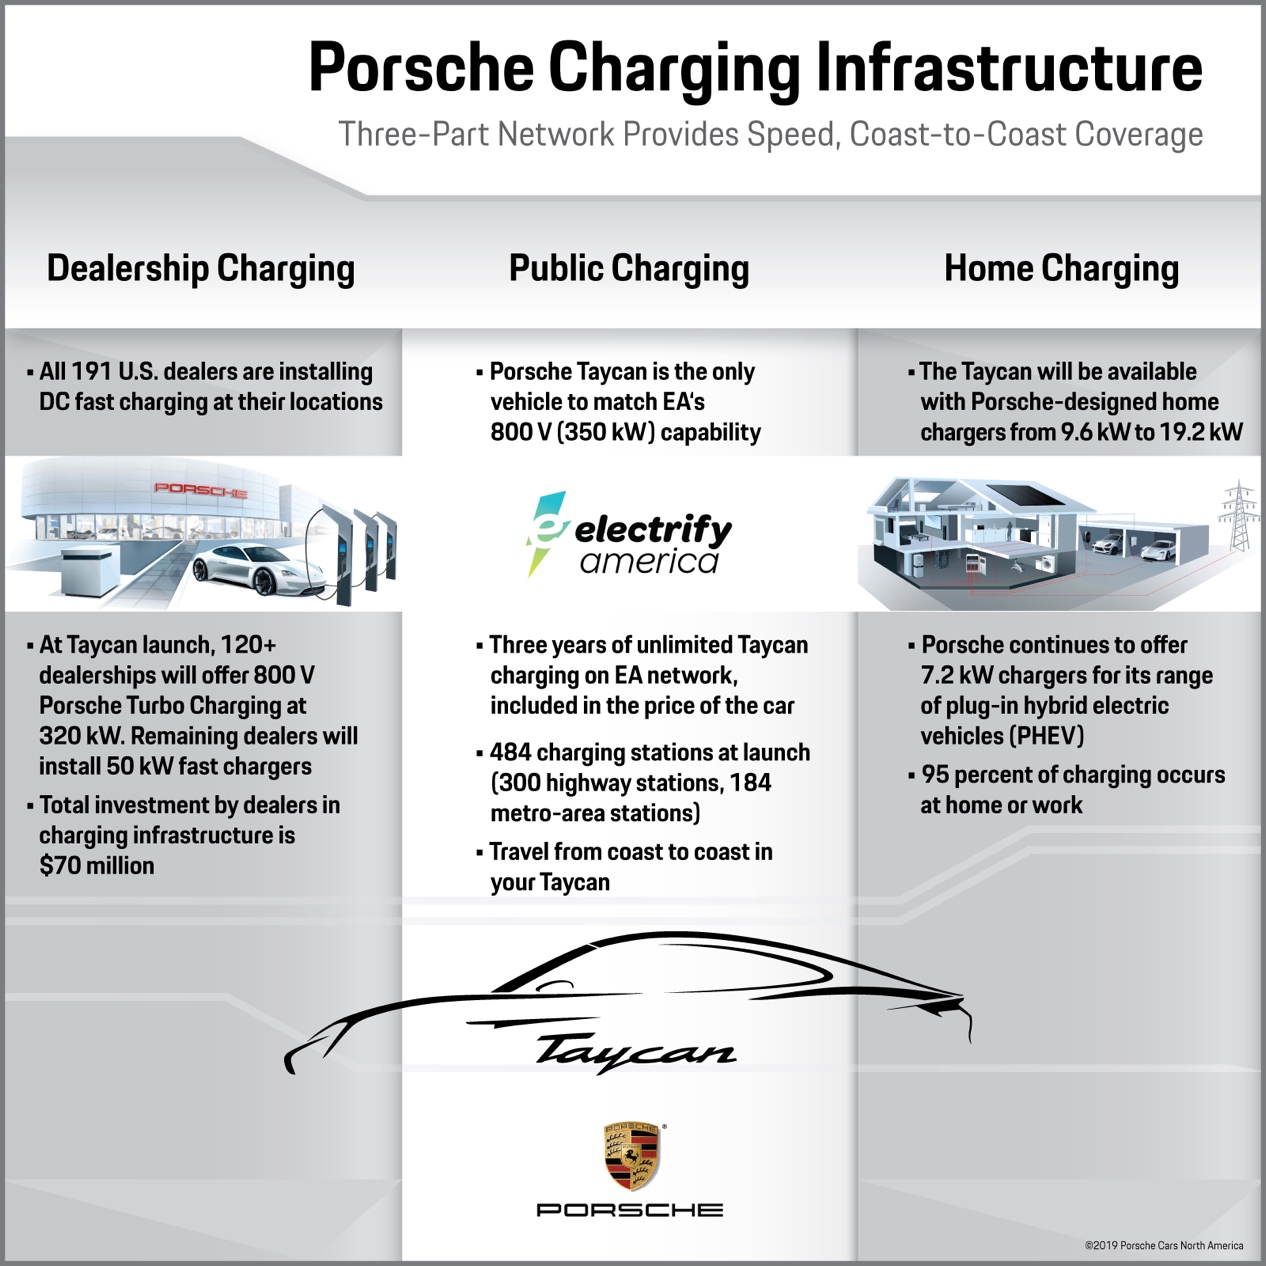 https://cdn.teslarati.com/wp-content/uploads/2019/01/Porsche-charging-infographic.jpg